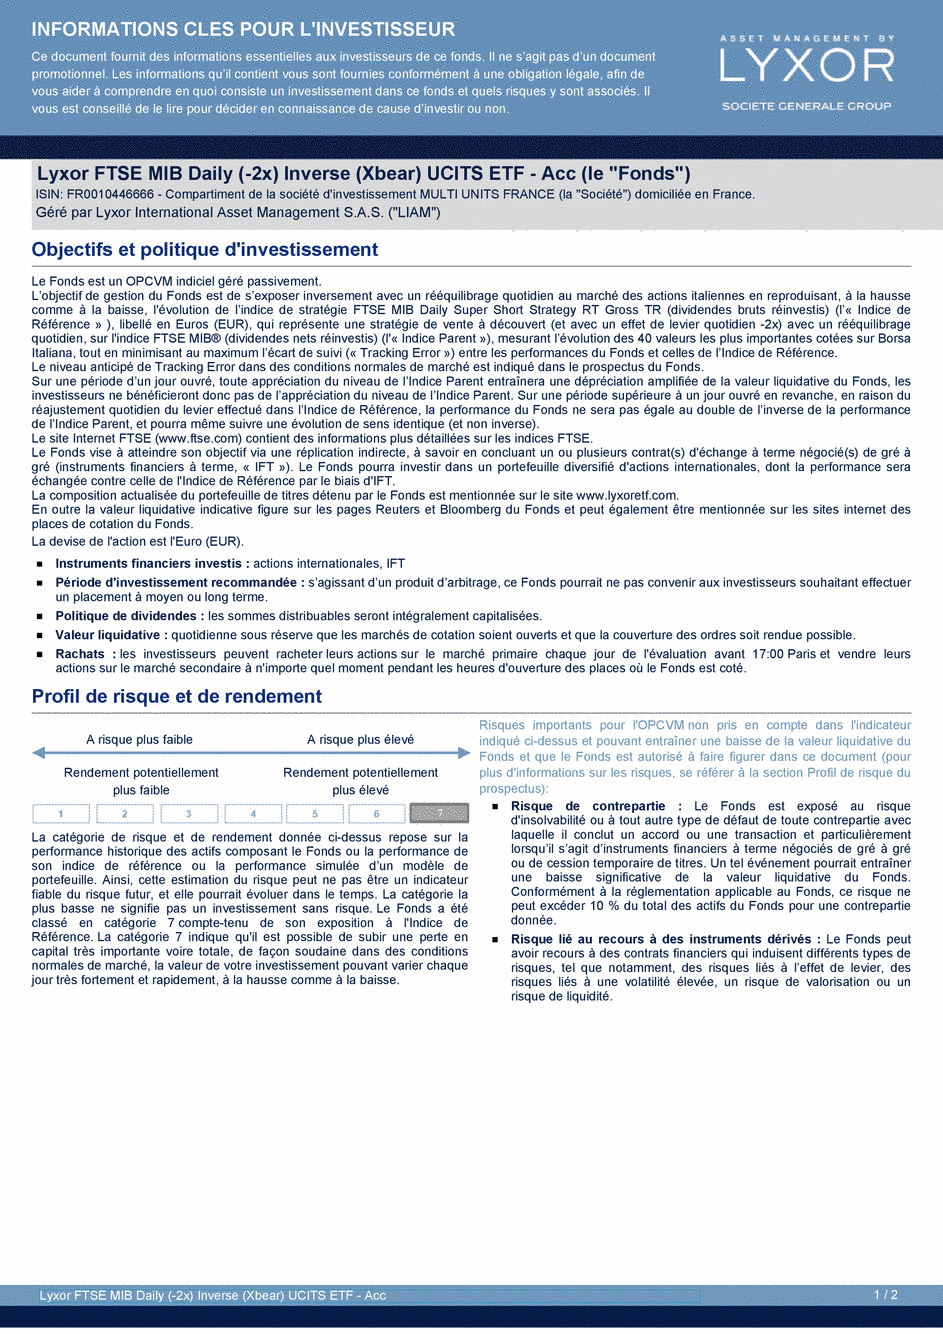 DICI Lyxor FTSE MIB Daily (-2x) Inverse (Xbear) UCITS ETF - Acc - 19/02/2021 - Français